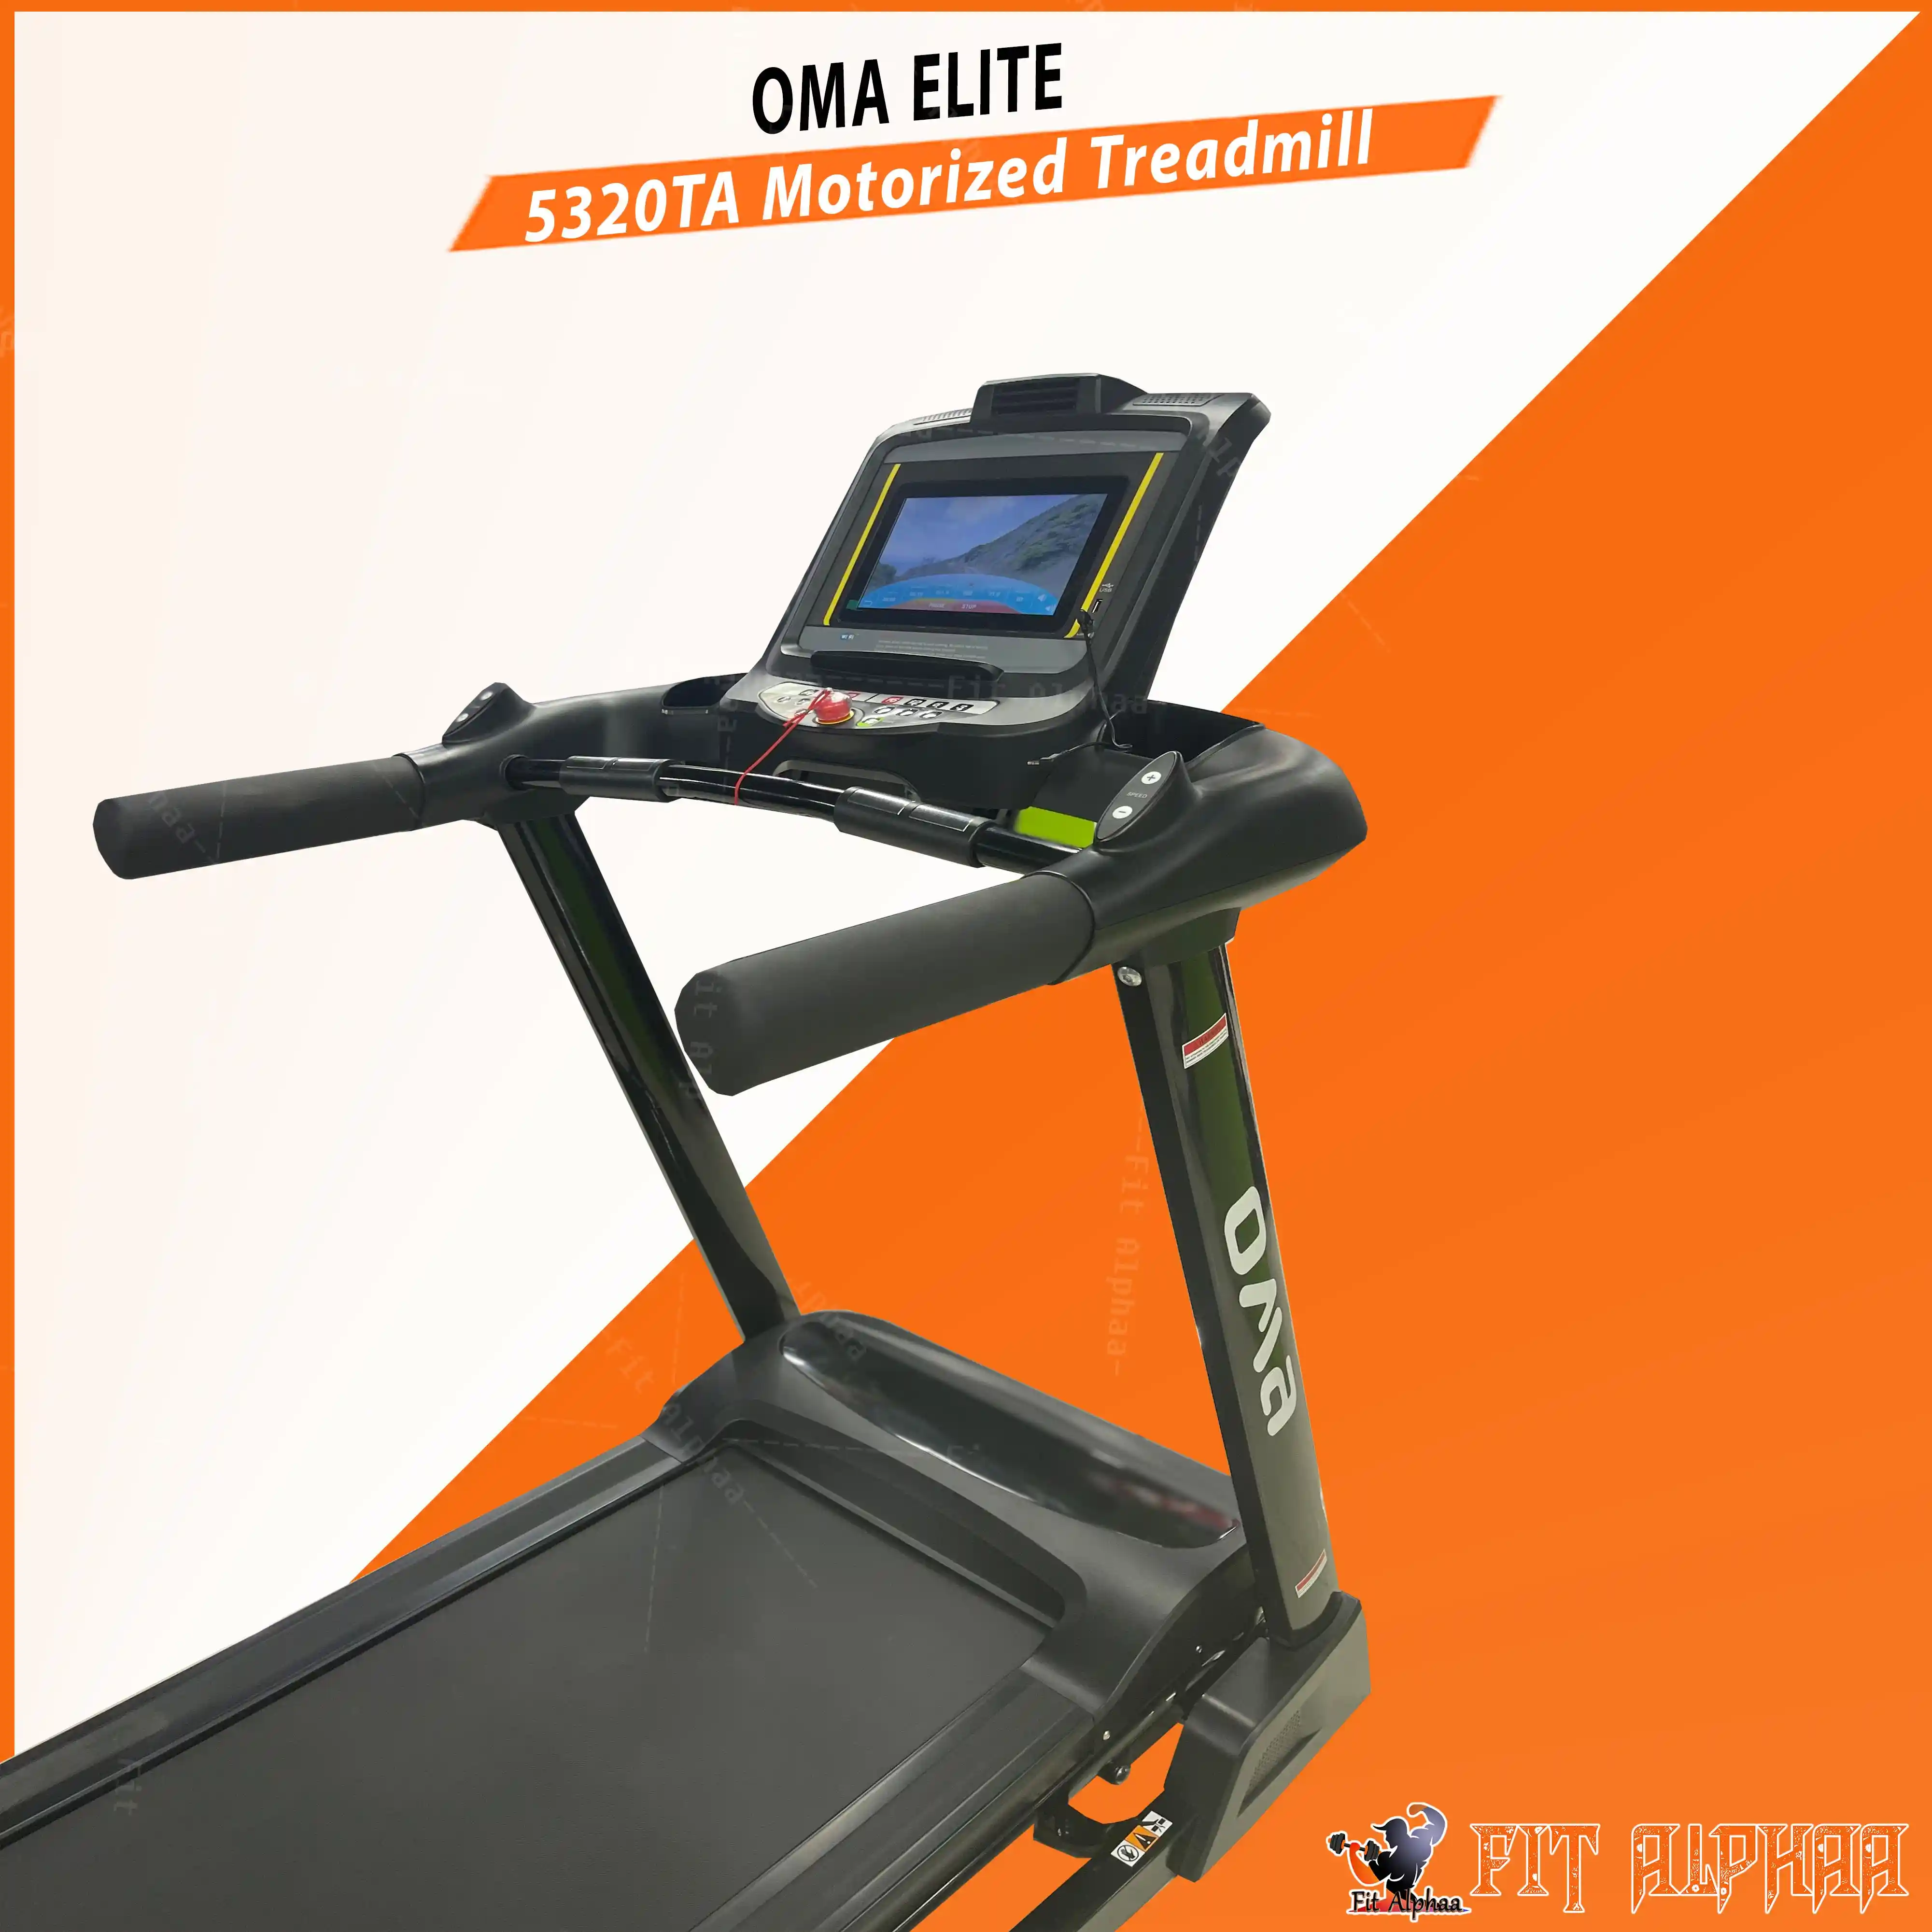 Oma Elite 5320TA Android Folding Motorized Treadmill - Home Use Running Machine